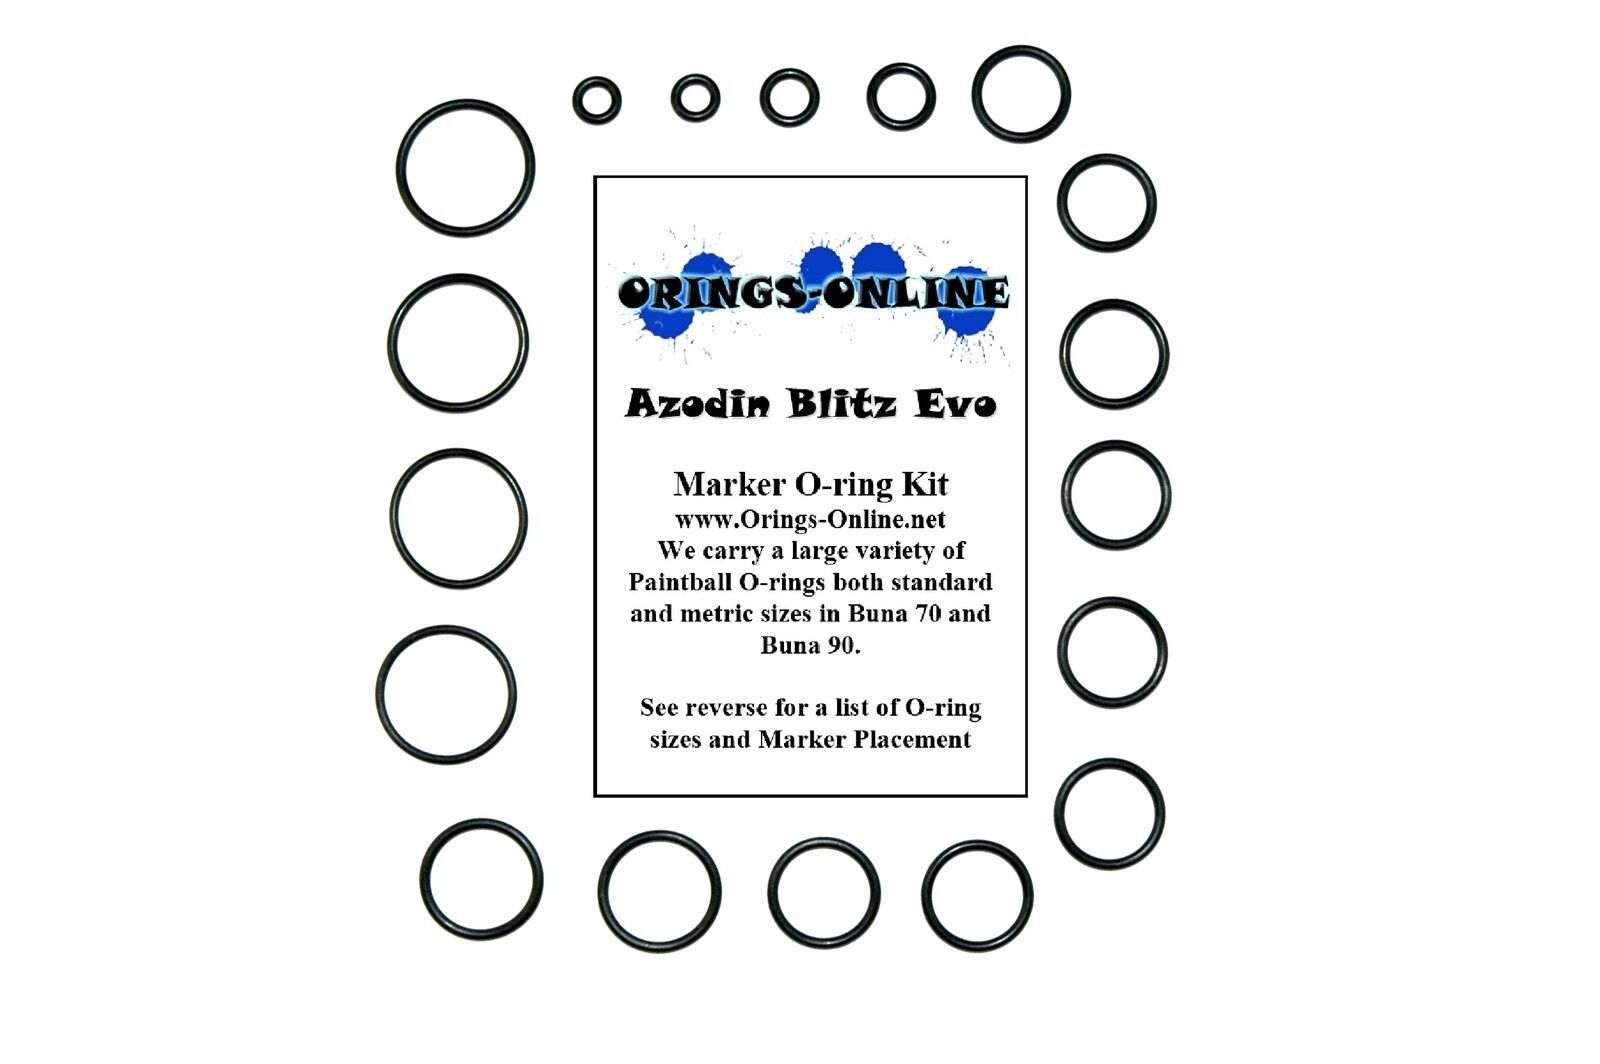 Azodin Blitz Evo Paintball Marker O-ring Oring Kit x 2 rebuilds